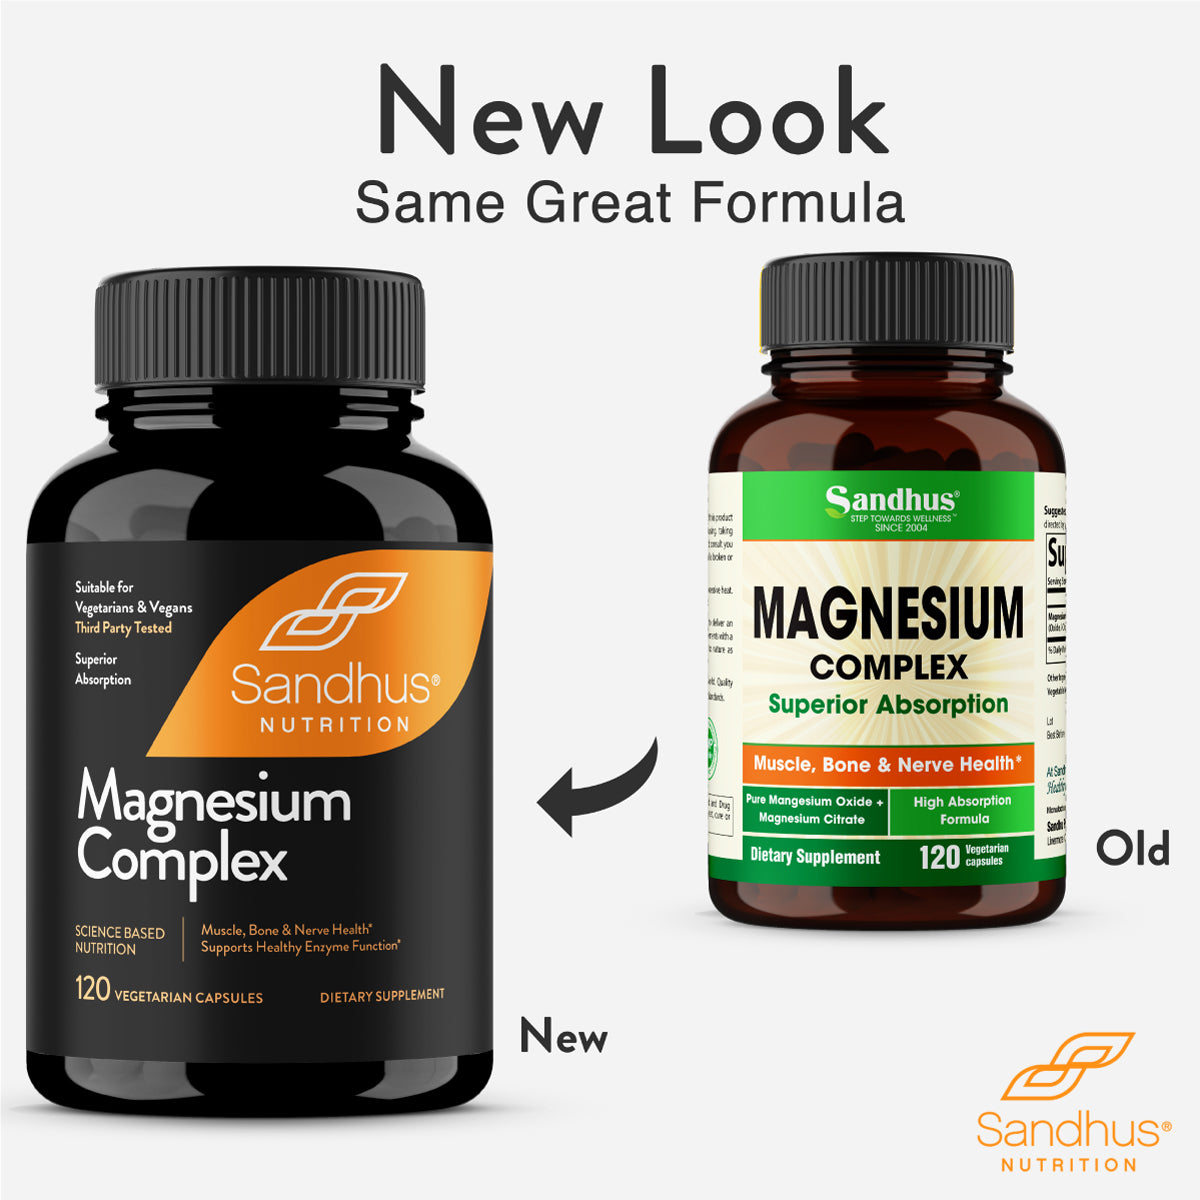 magnesium-complex-old-new-supplement-bottle